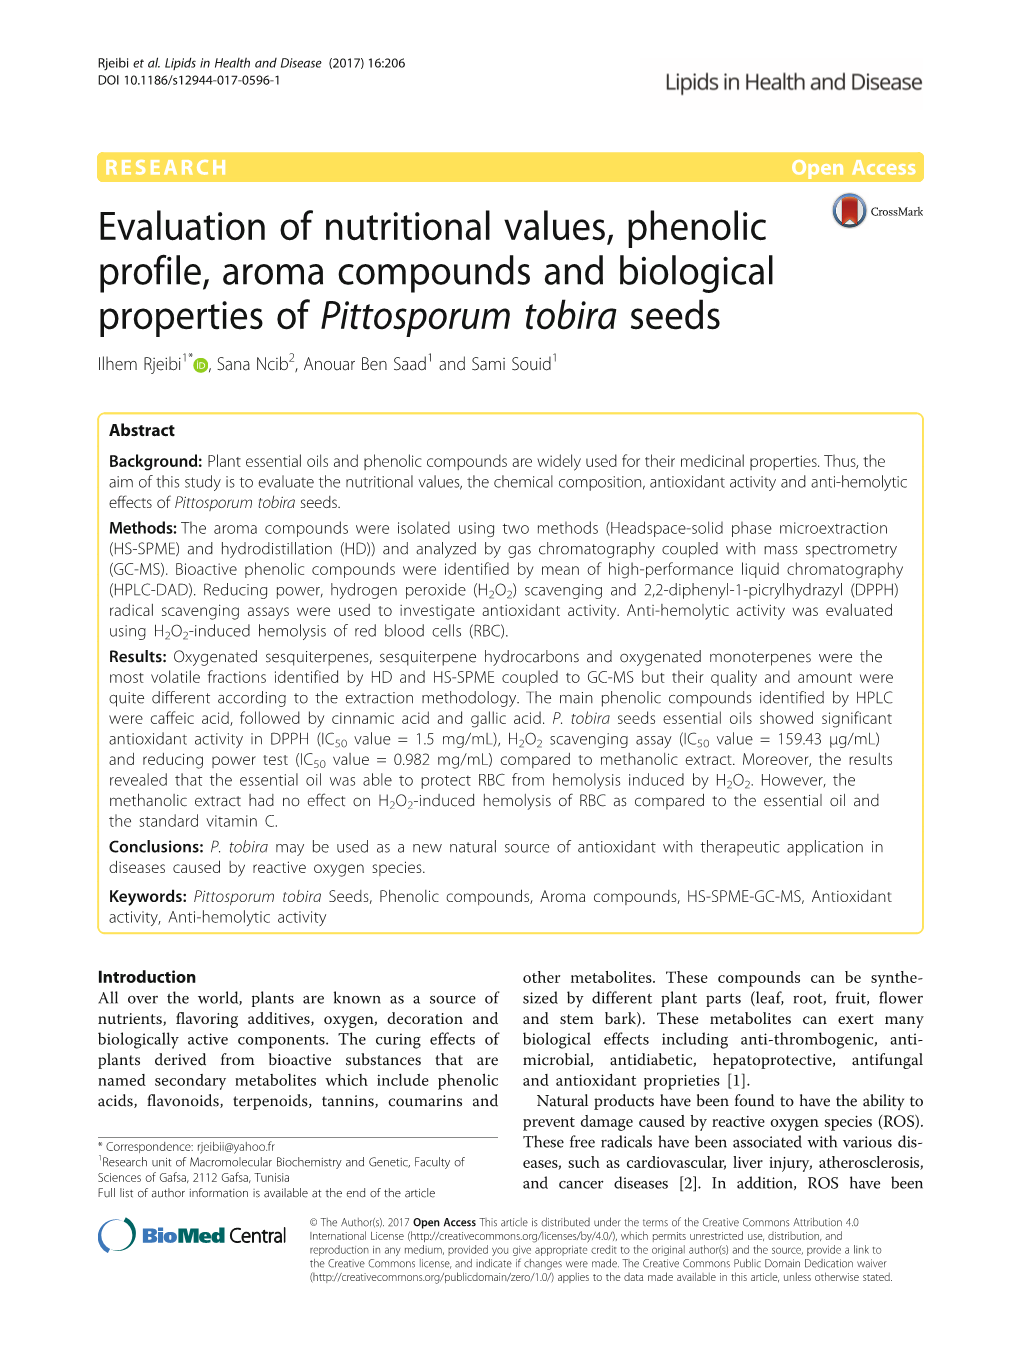 Evaluation of Nutritional Values, Phenolic Profile, Aroma Compounds